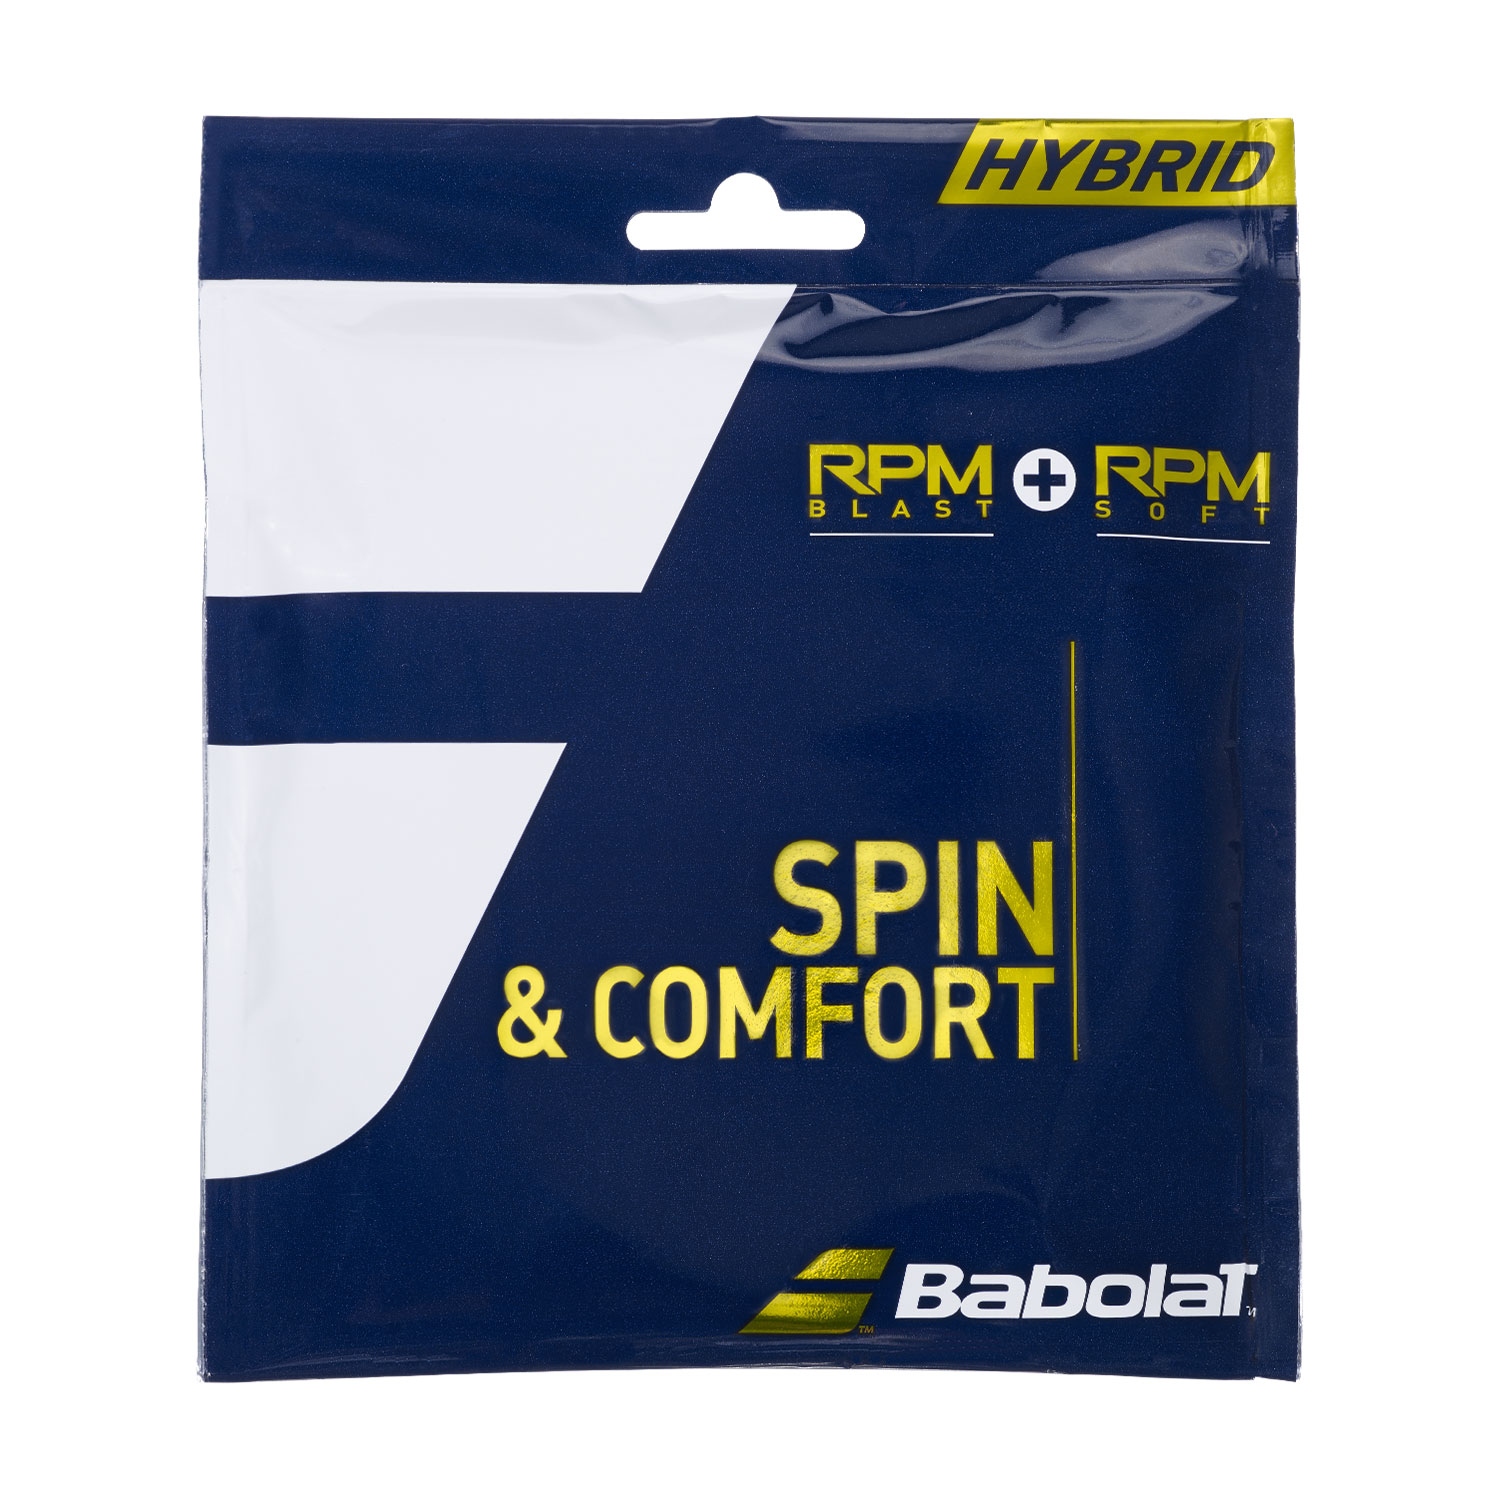 Babolat Hybrid RPM Blast 1.25 + RPM Soft 1.30 Set 12 m - Black/Grey